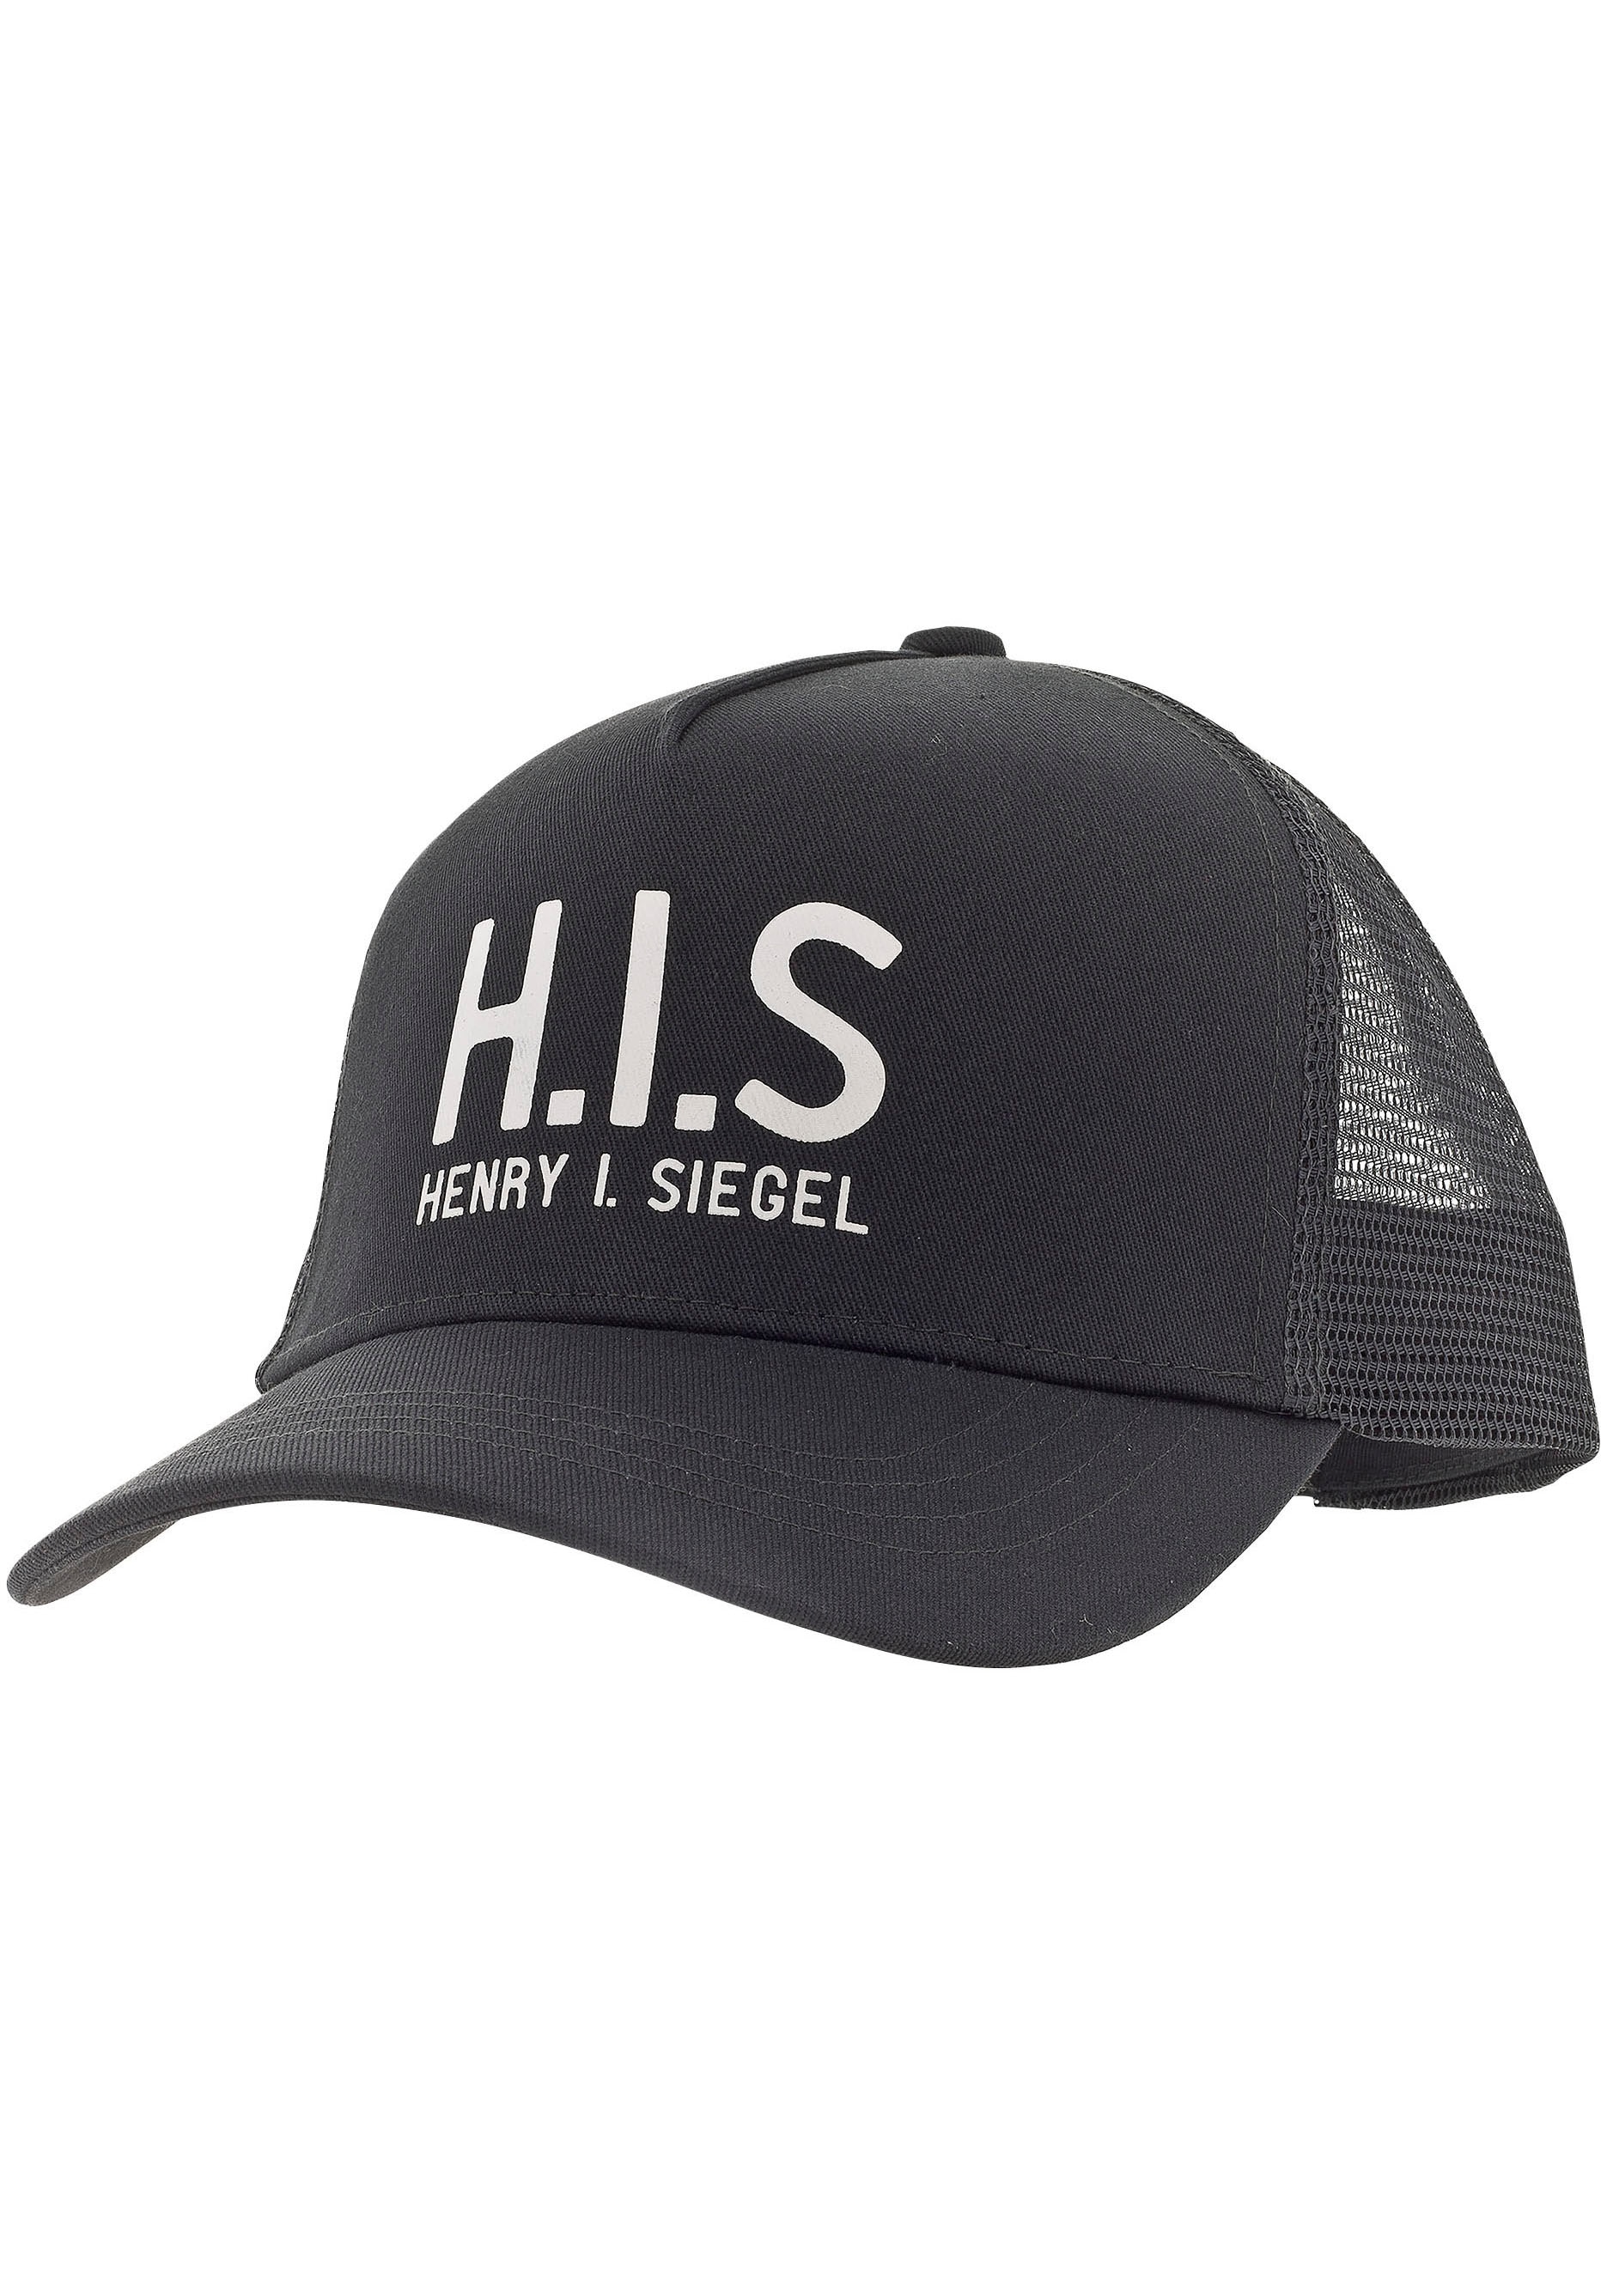 H.I.S Baseball Cap, Mesh-Cap mit H.I.S.-Print auf Rechnung online bestellen  | BAUR | Baseball Caps